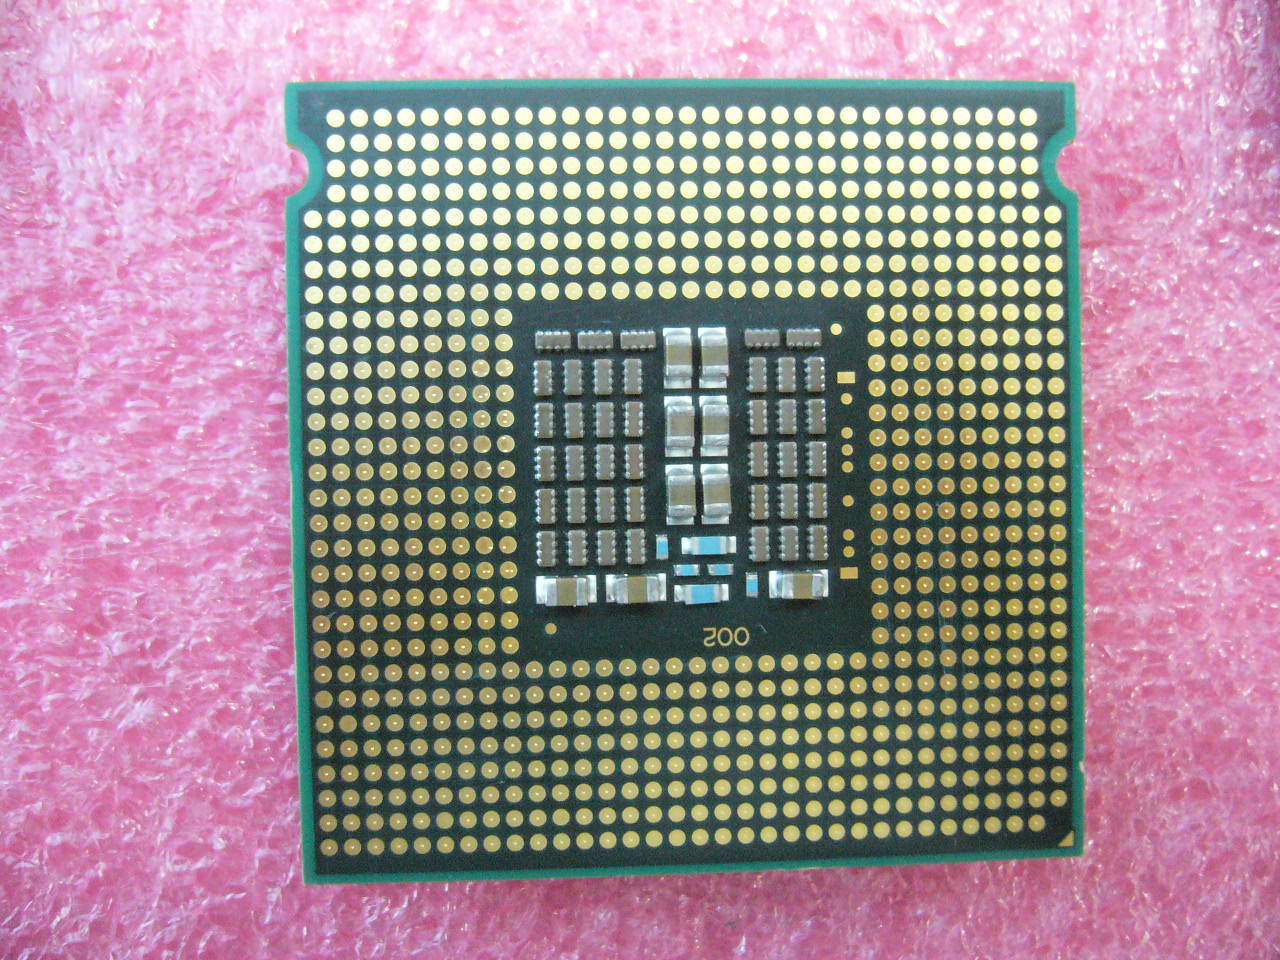 QTY 1x Intel Xeon CPU Quad Core E5430 2.66Ghz/12MB/1333Mhz LGA771 SLANU SLBBK - zum Schließen ins Bild klicken